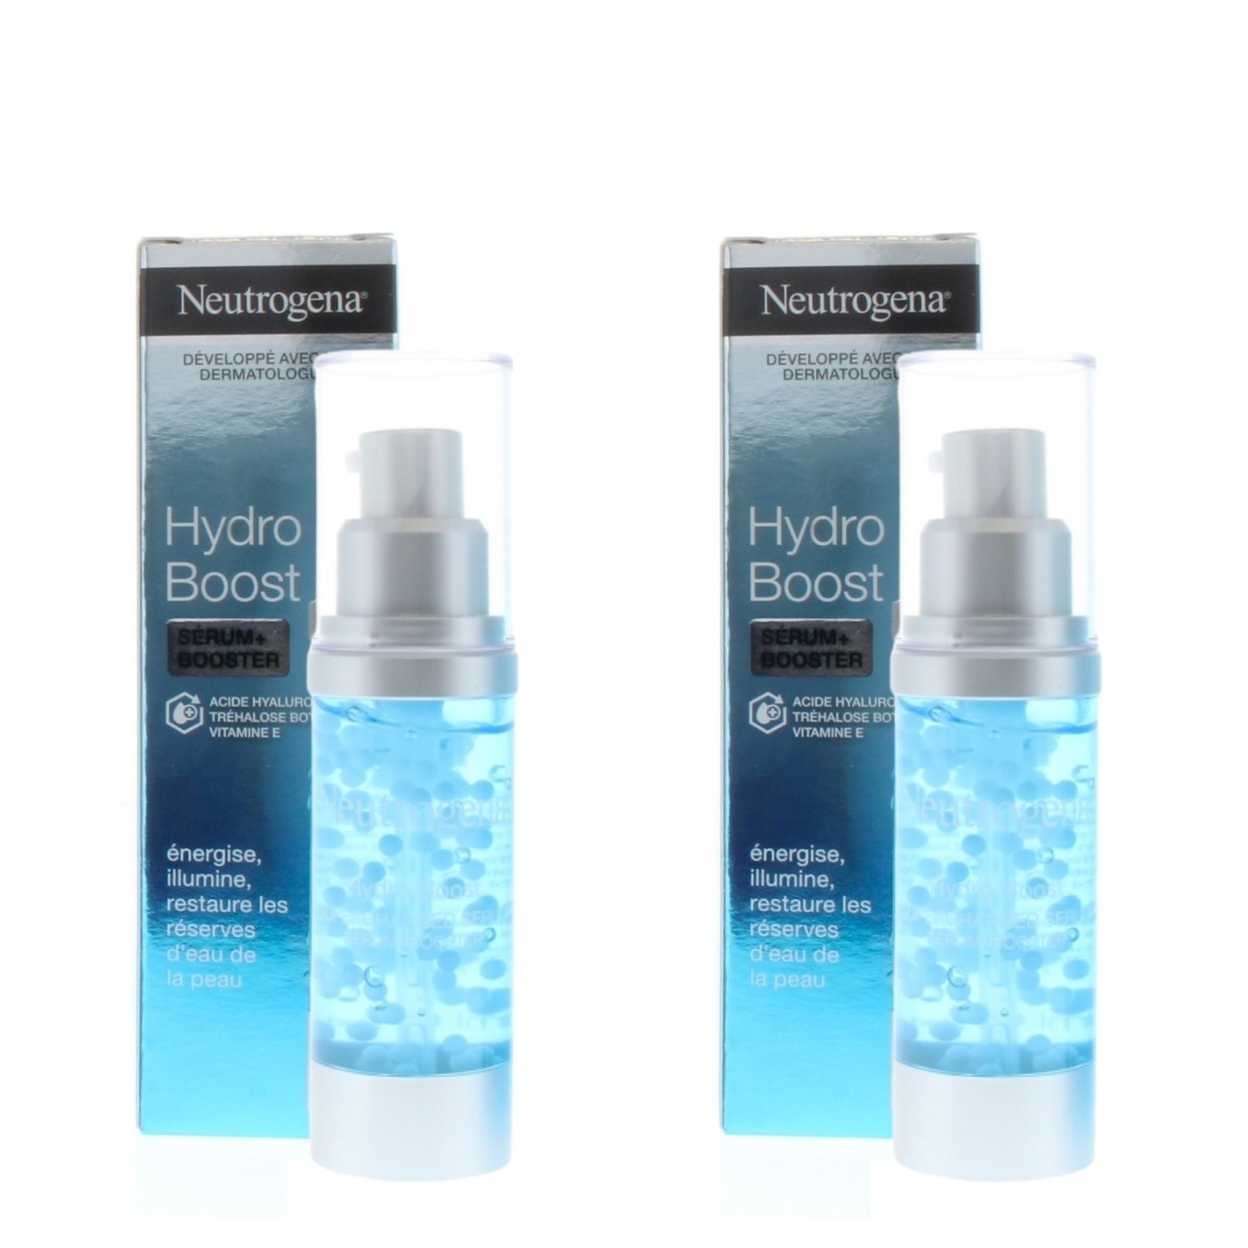 Neutrogena Hydro Boost Serum Booster 30ml (2 Pack)